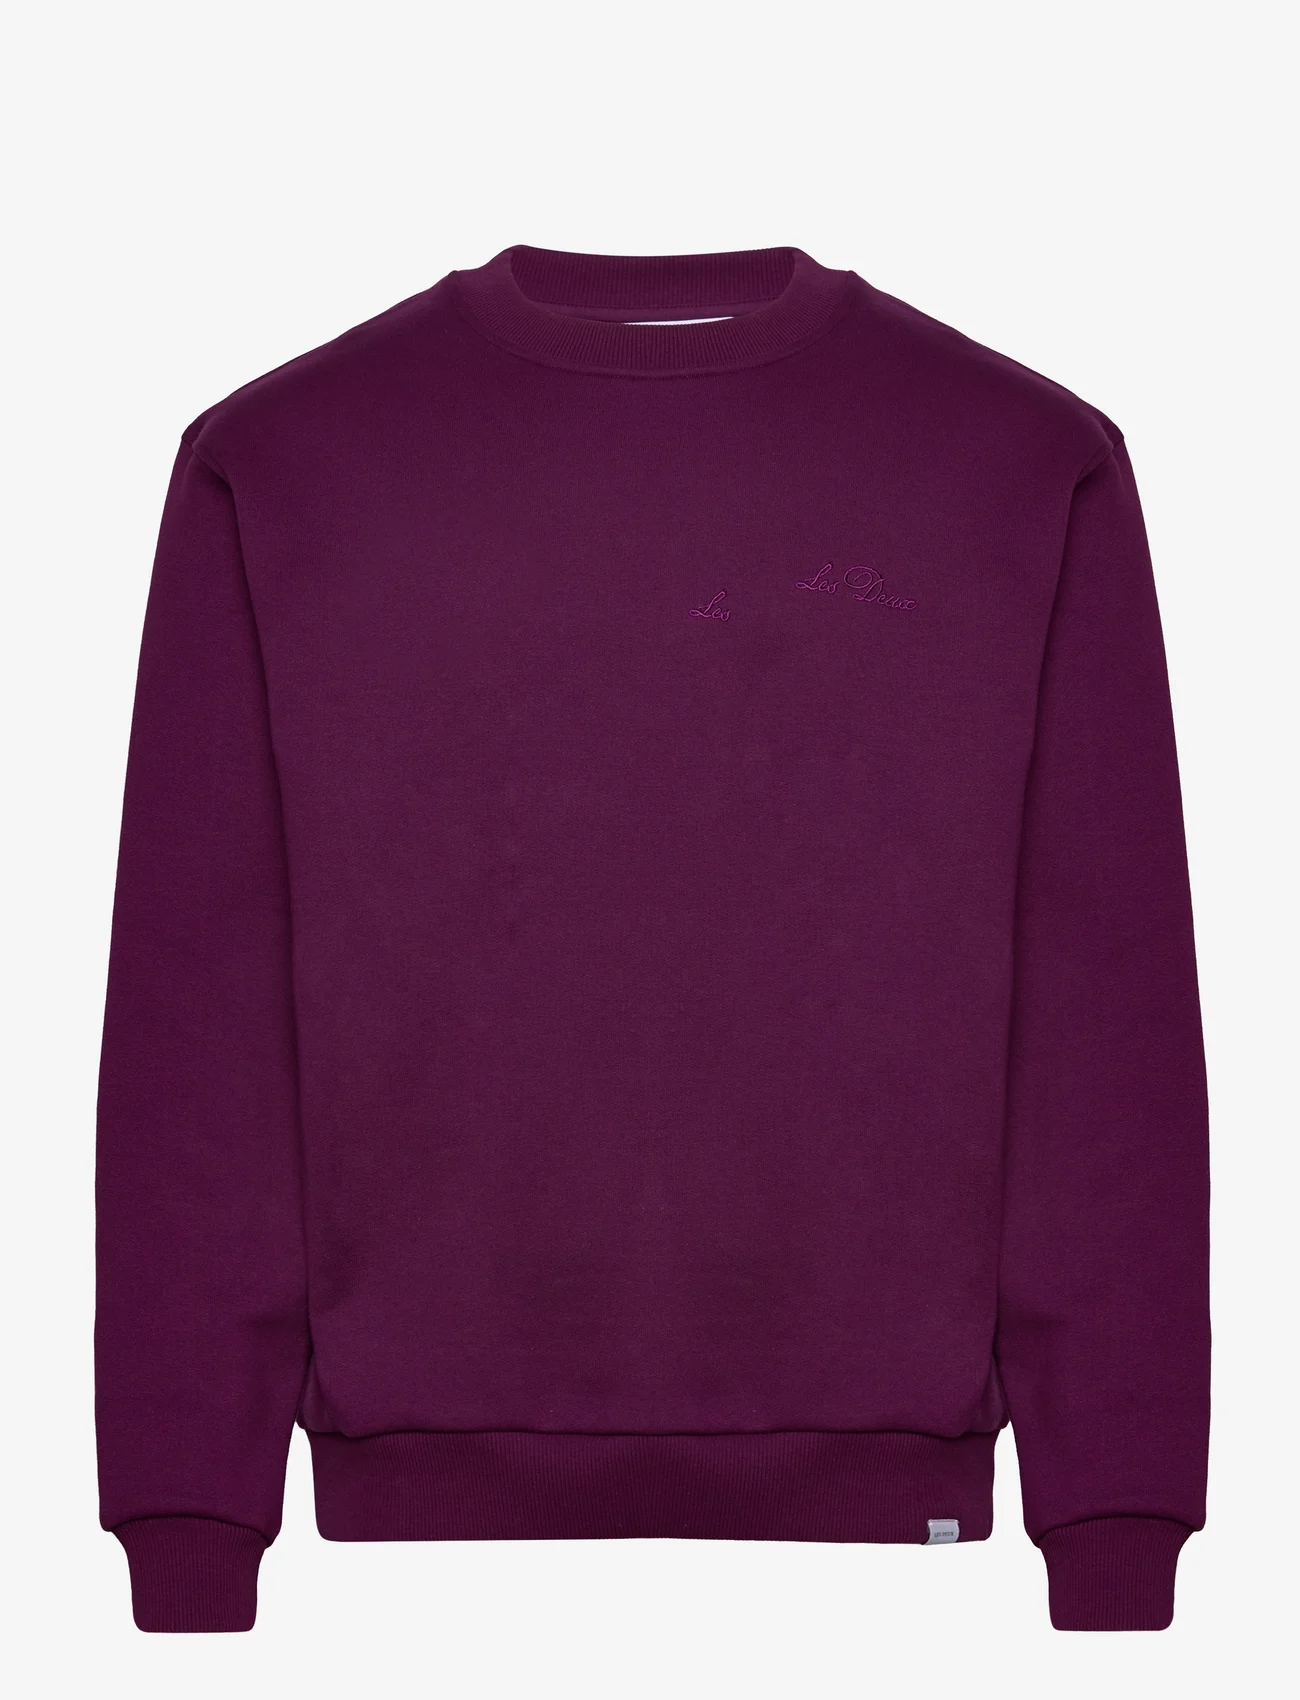 Les Deux - Crew Sweatshirt - sweatshirts - dark purple - 0